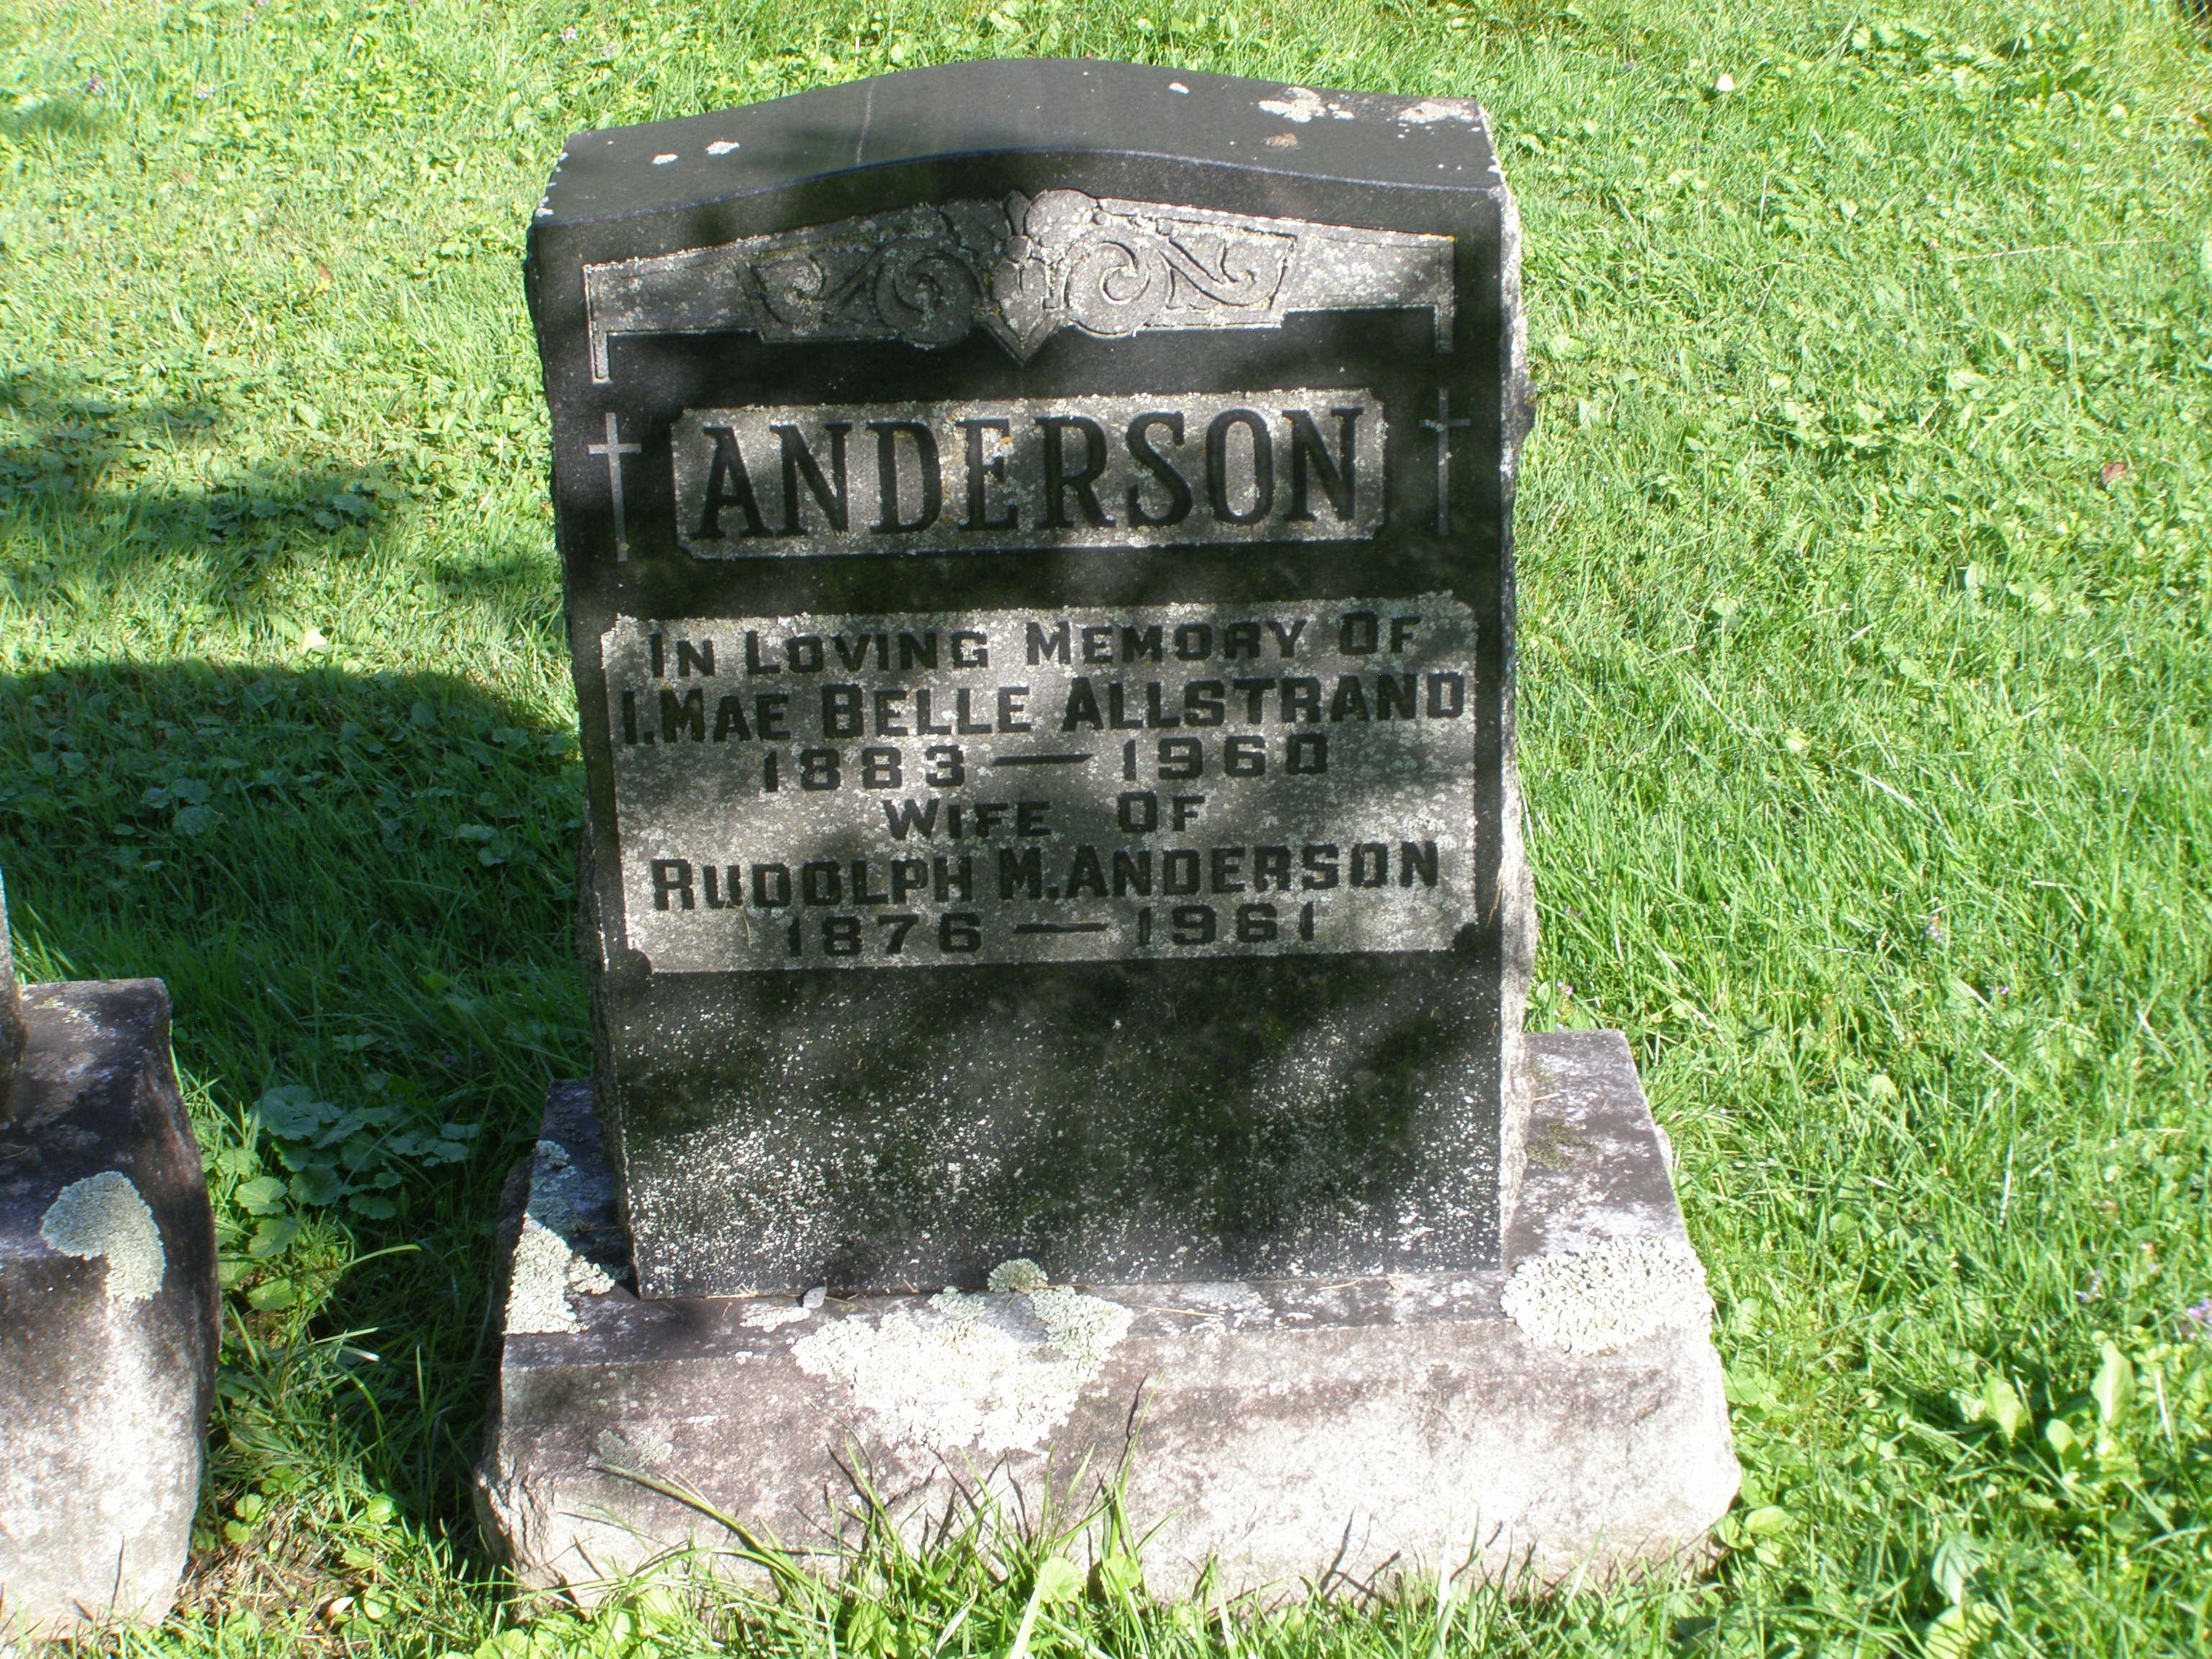 Anderson's grave